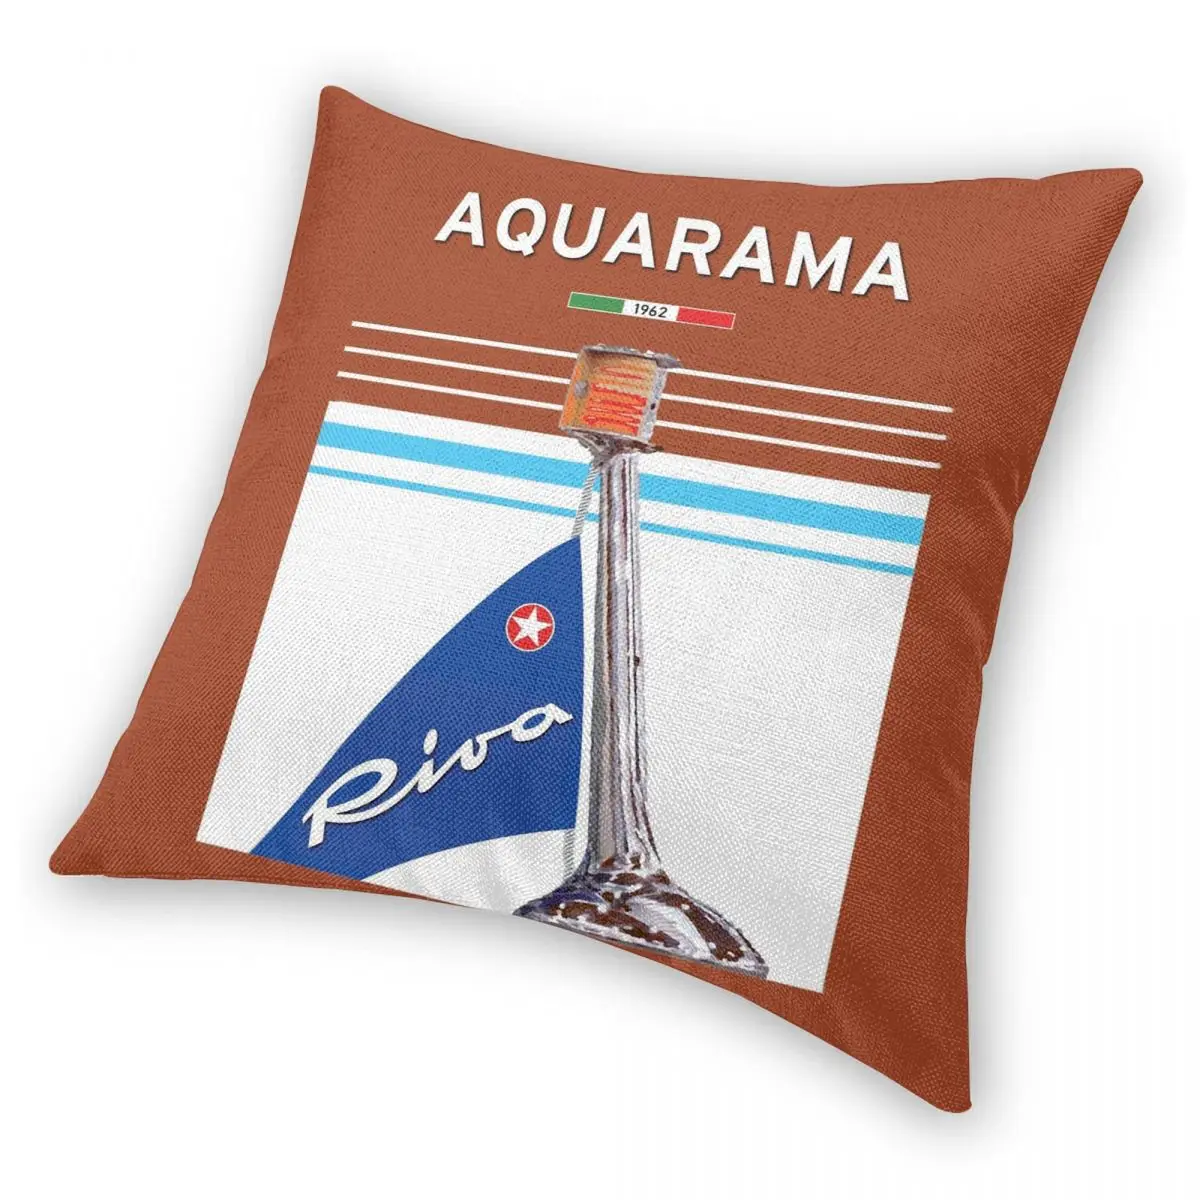 Riva Aquarama 1962 Italy Travel Poster Square Pillowcase Polyester Linen Velvet Printed Zip Decor Sofa Cushion Cover Wholesale